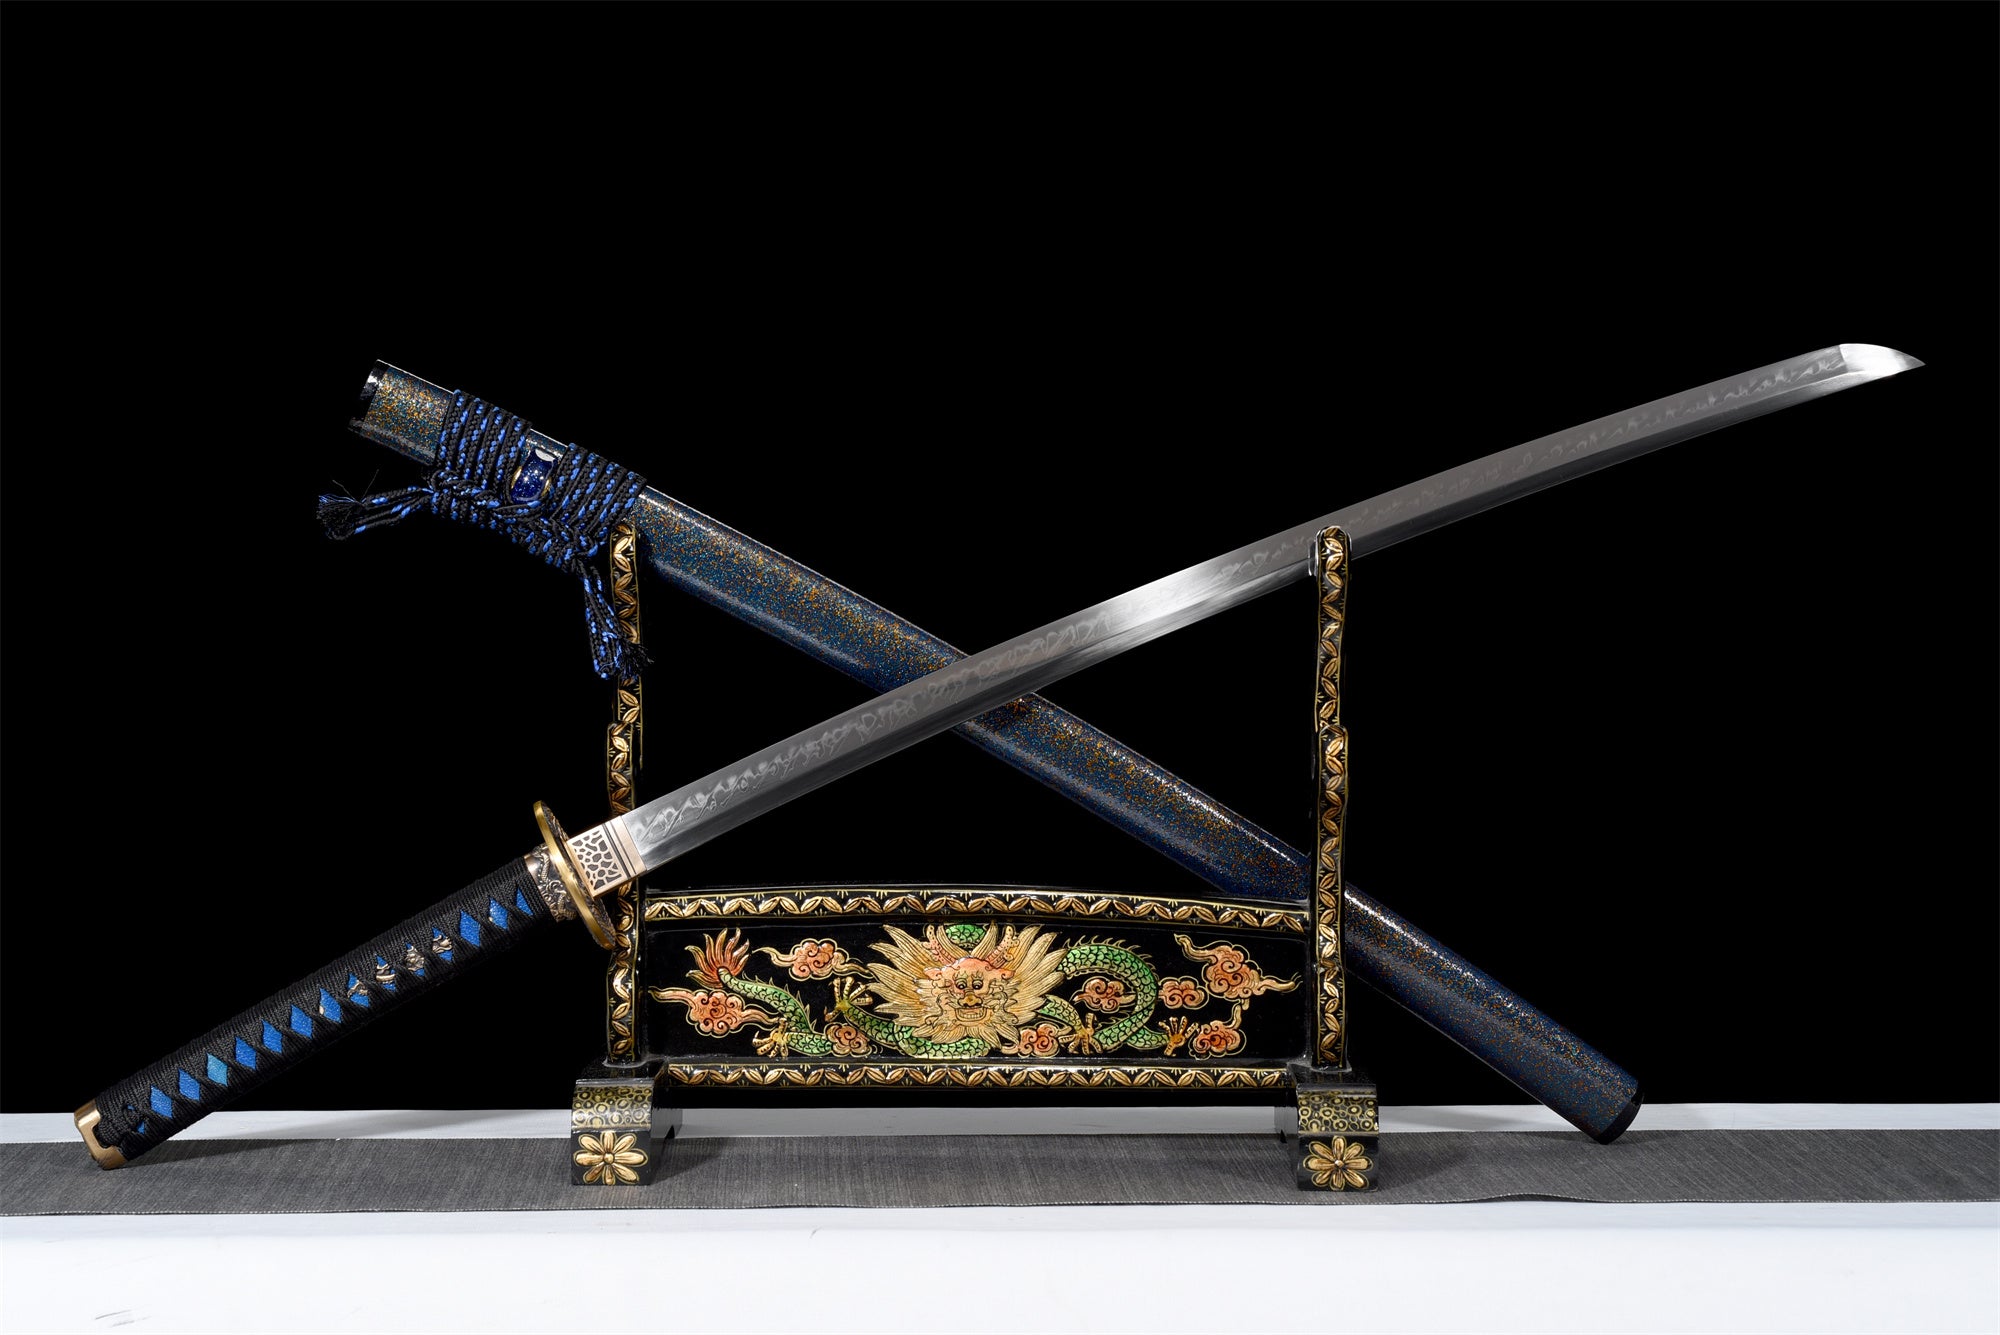 T10 Steel  Clay Tempered With Hamon Handmade Katana Sword With Dragon Tsuba Real Japanese Samurai Sword Full Tang